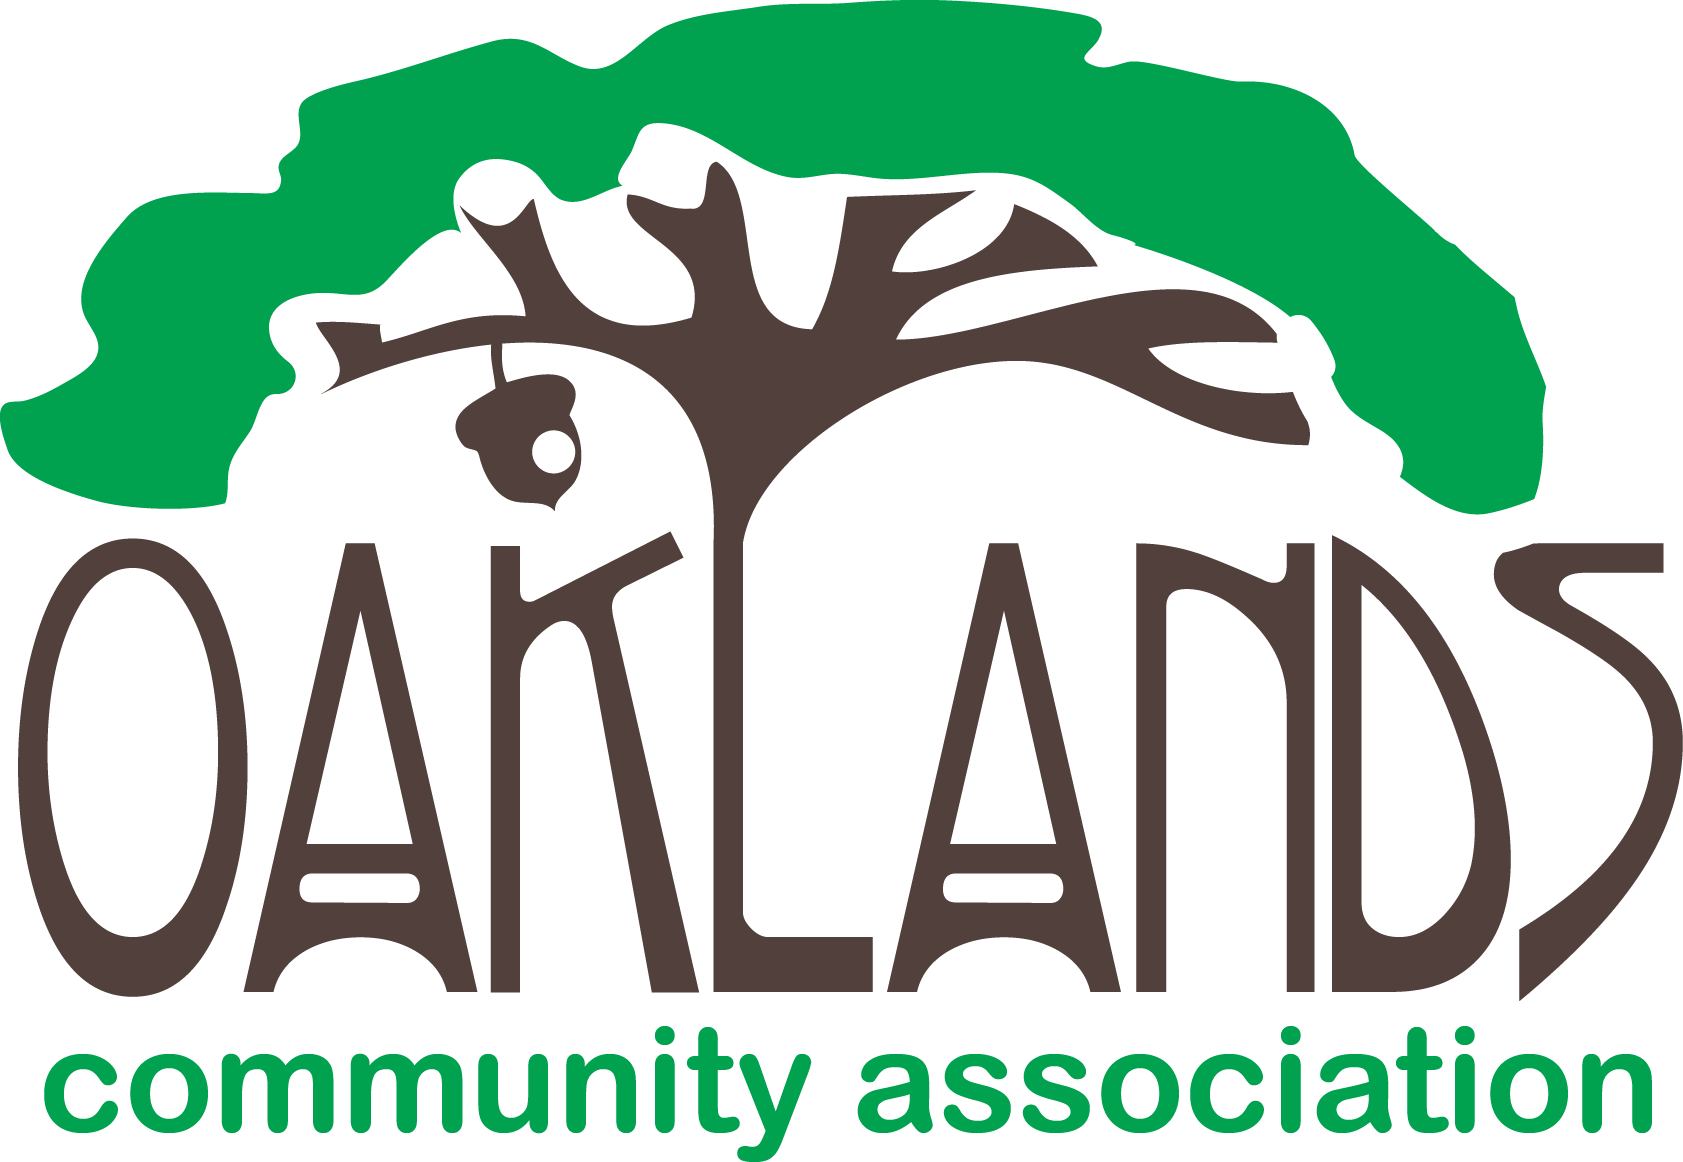 OAKLANDS COMMUNITY ASSOCIATION logo